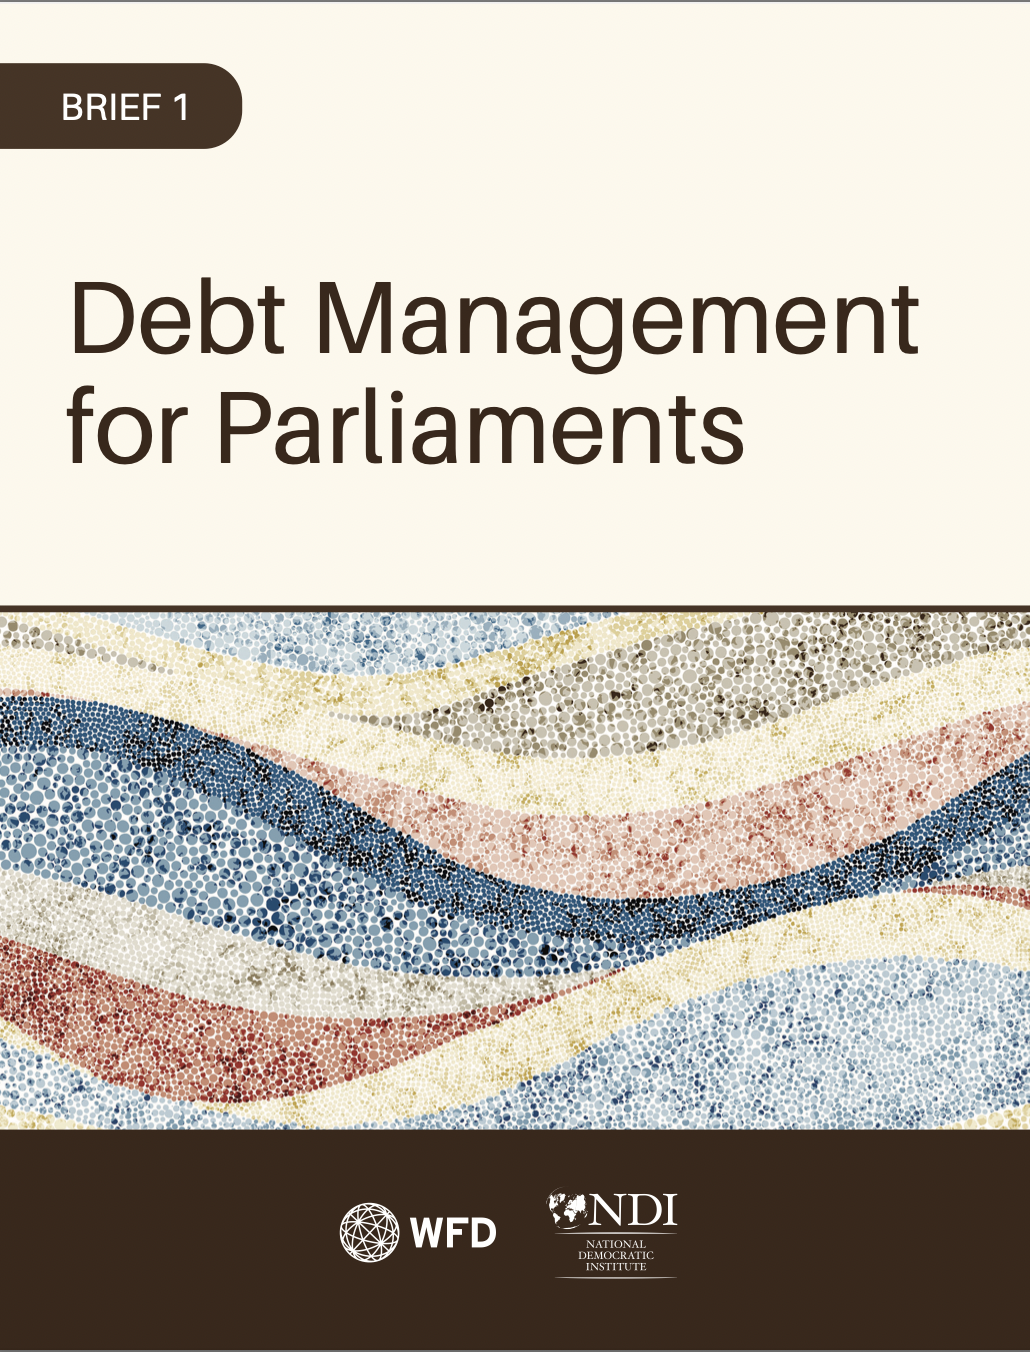 Policy briefs on parliamentary public debt management